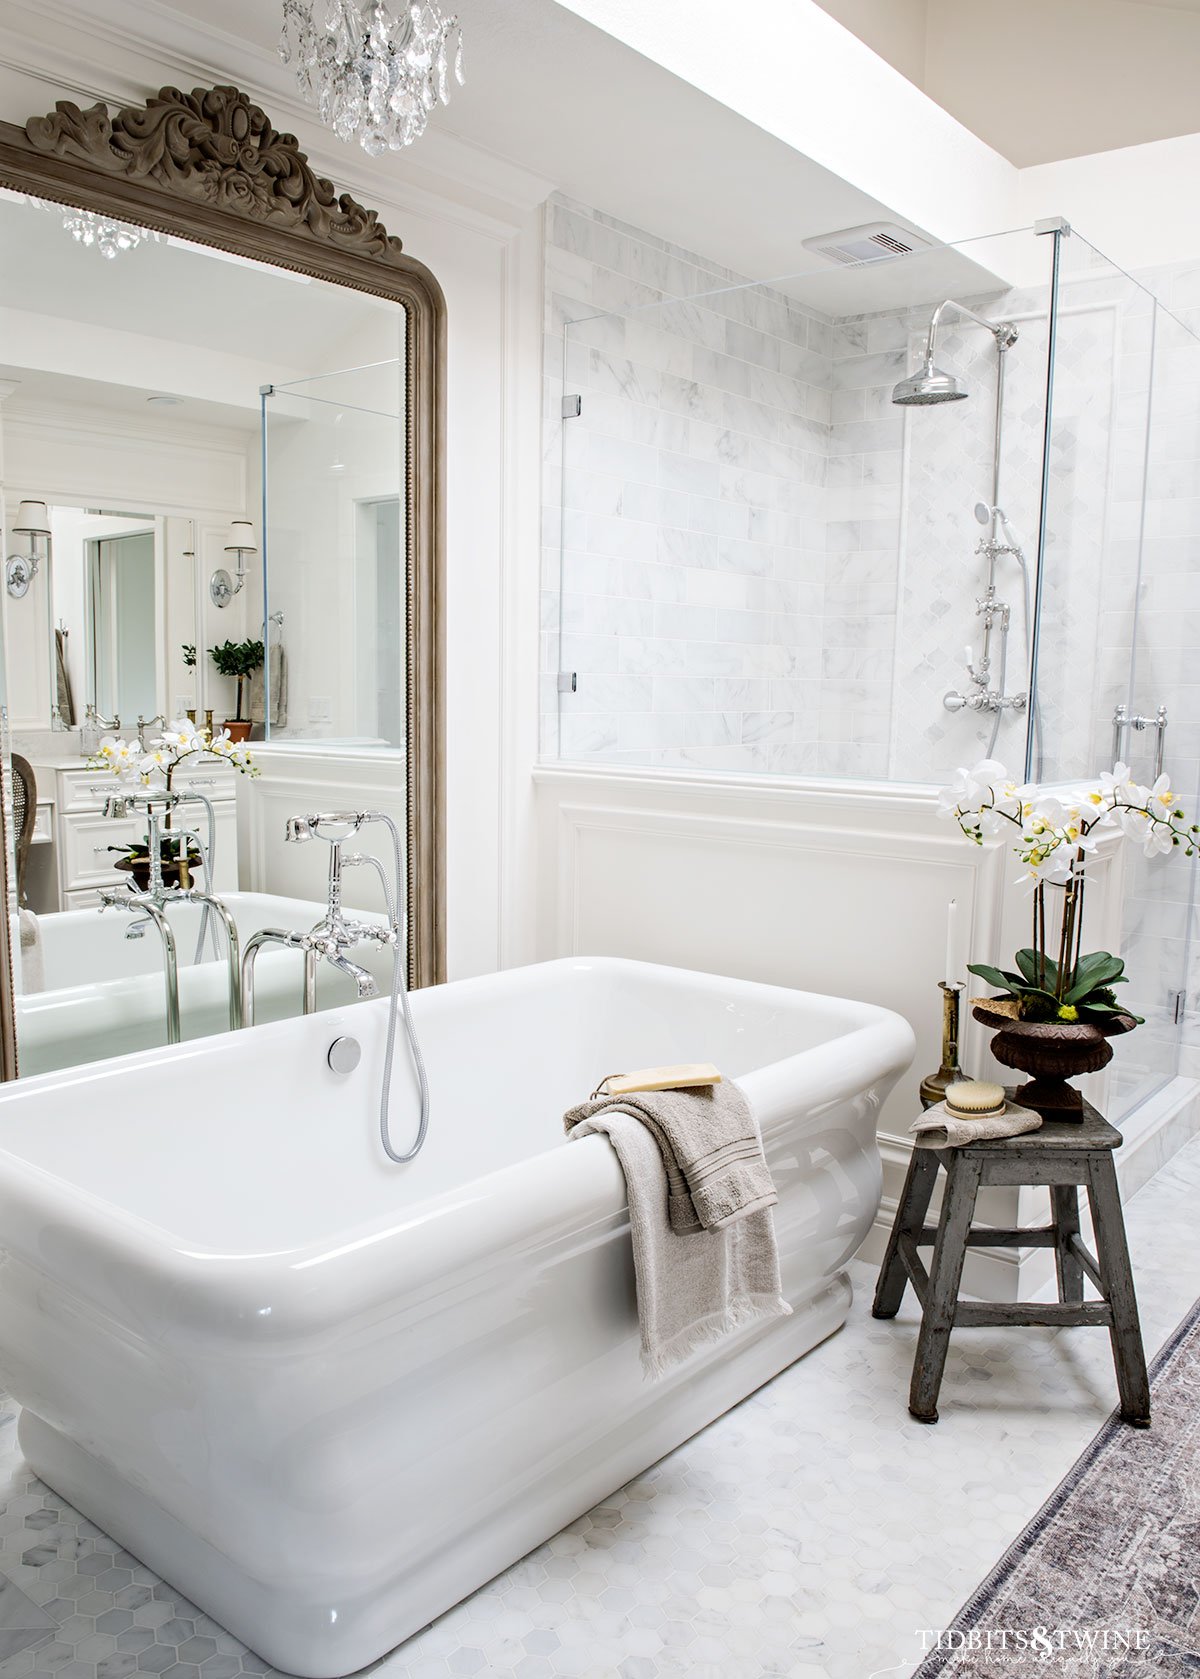 freestanding tub in carrara marble bathroom with large mirror behind tub